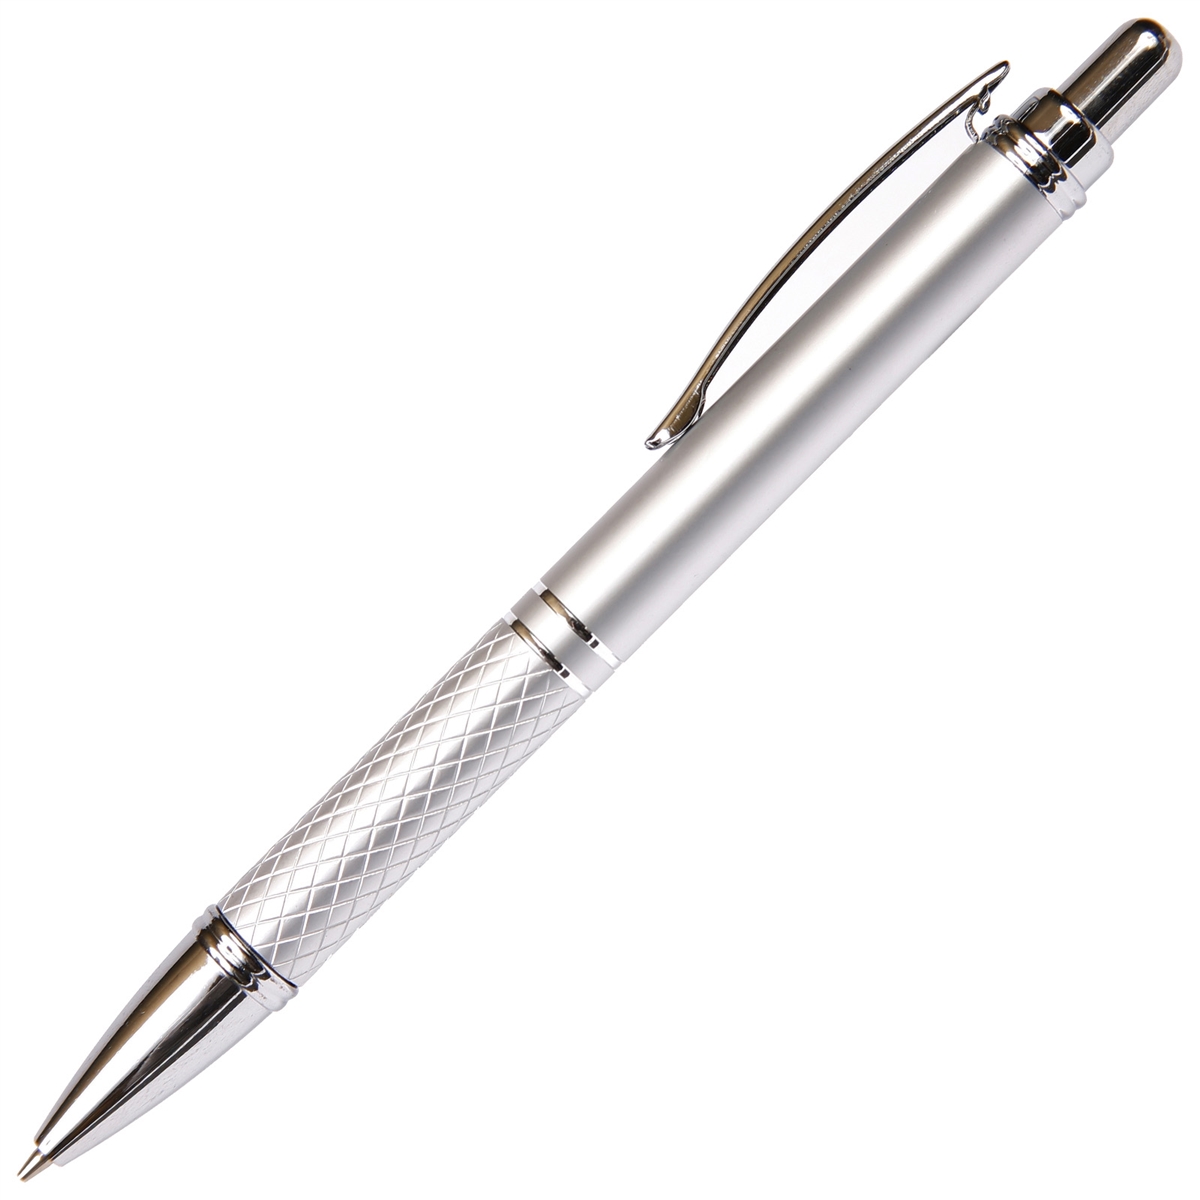 A204 - Silver Pencil